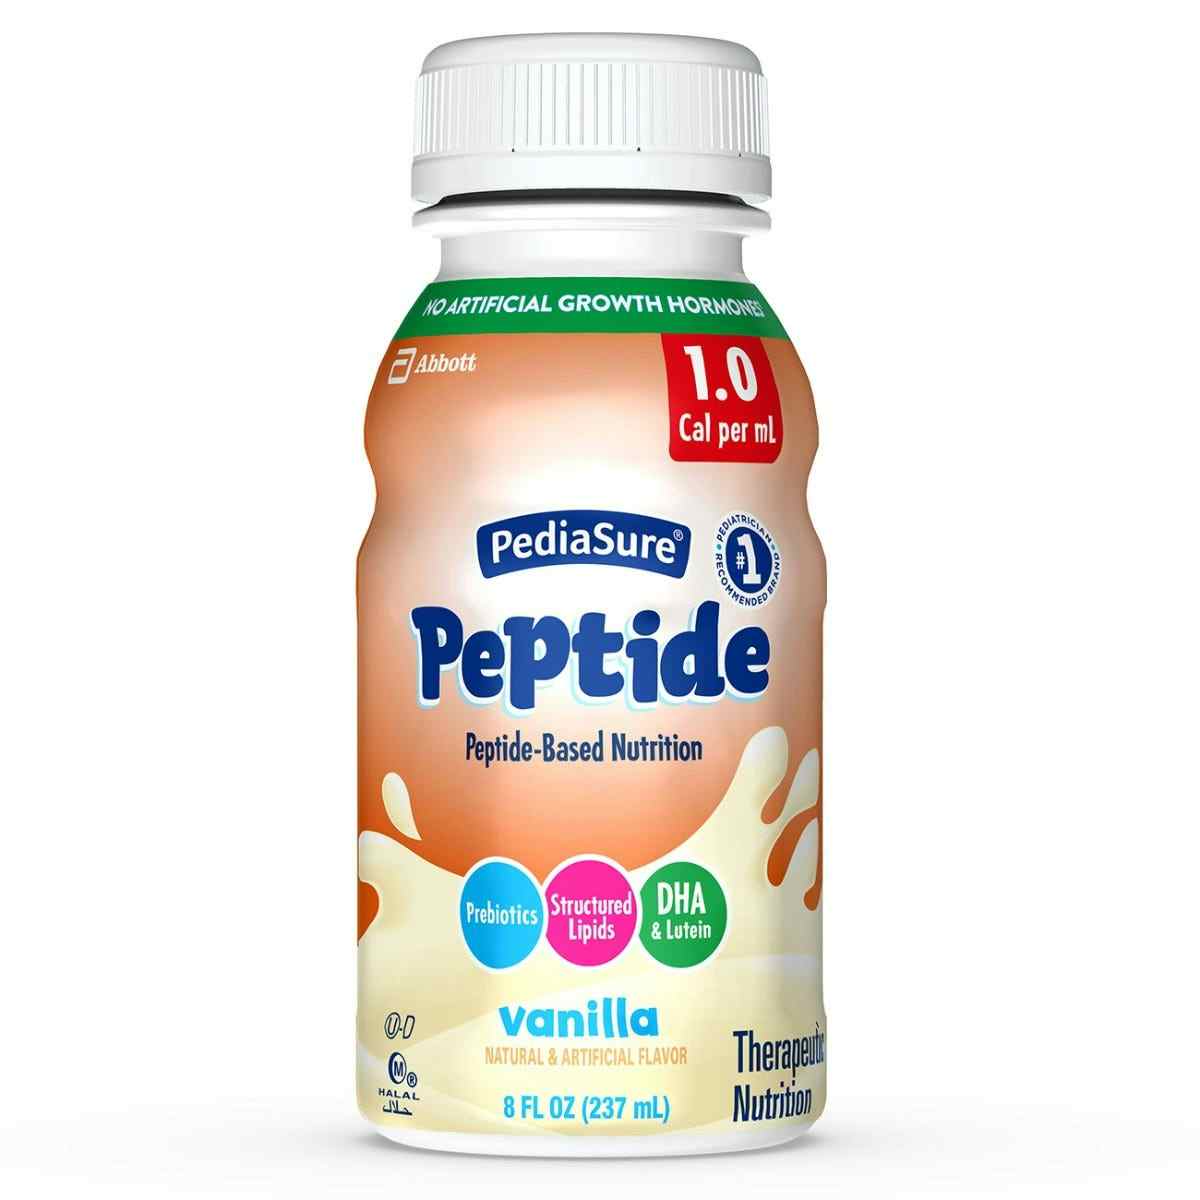 Pediasure Peptide 1.0 Cal Oral Supplement